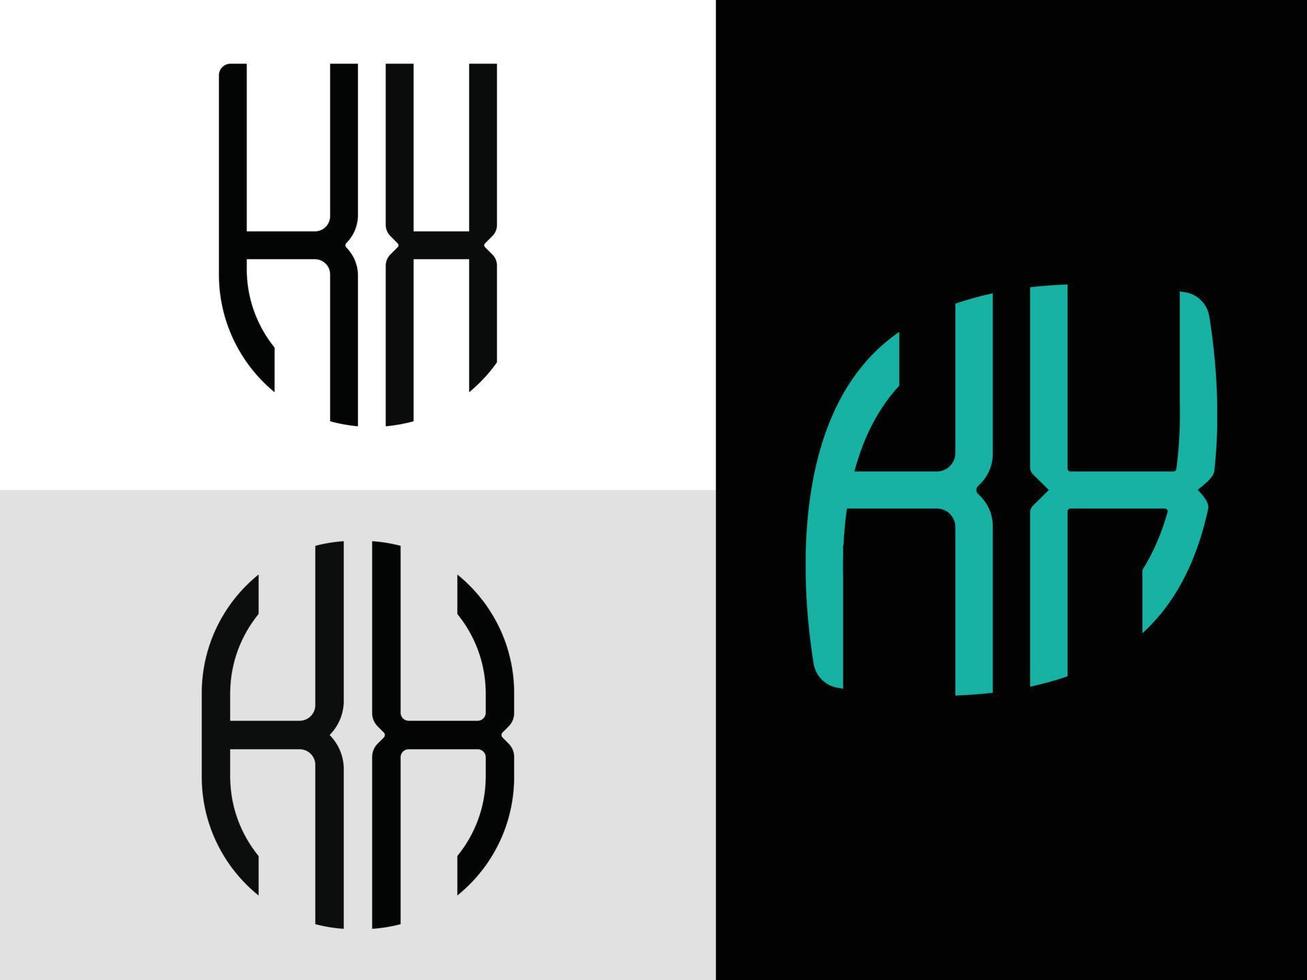 kreative anfangsbuchstaben kx logo designs paket. vektor